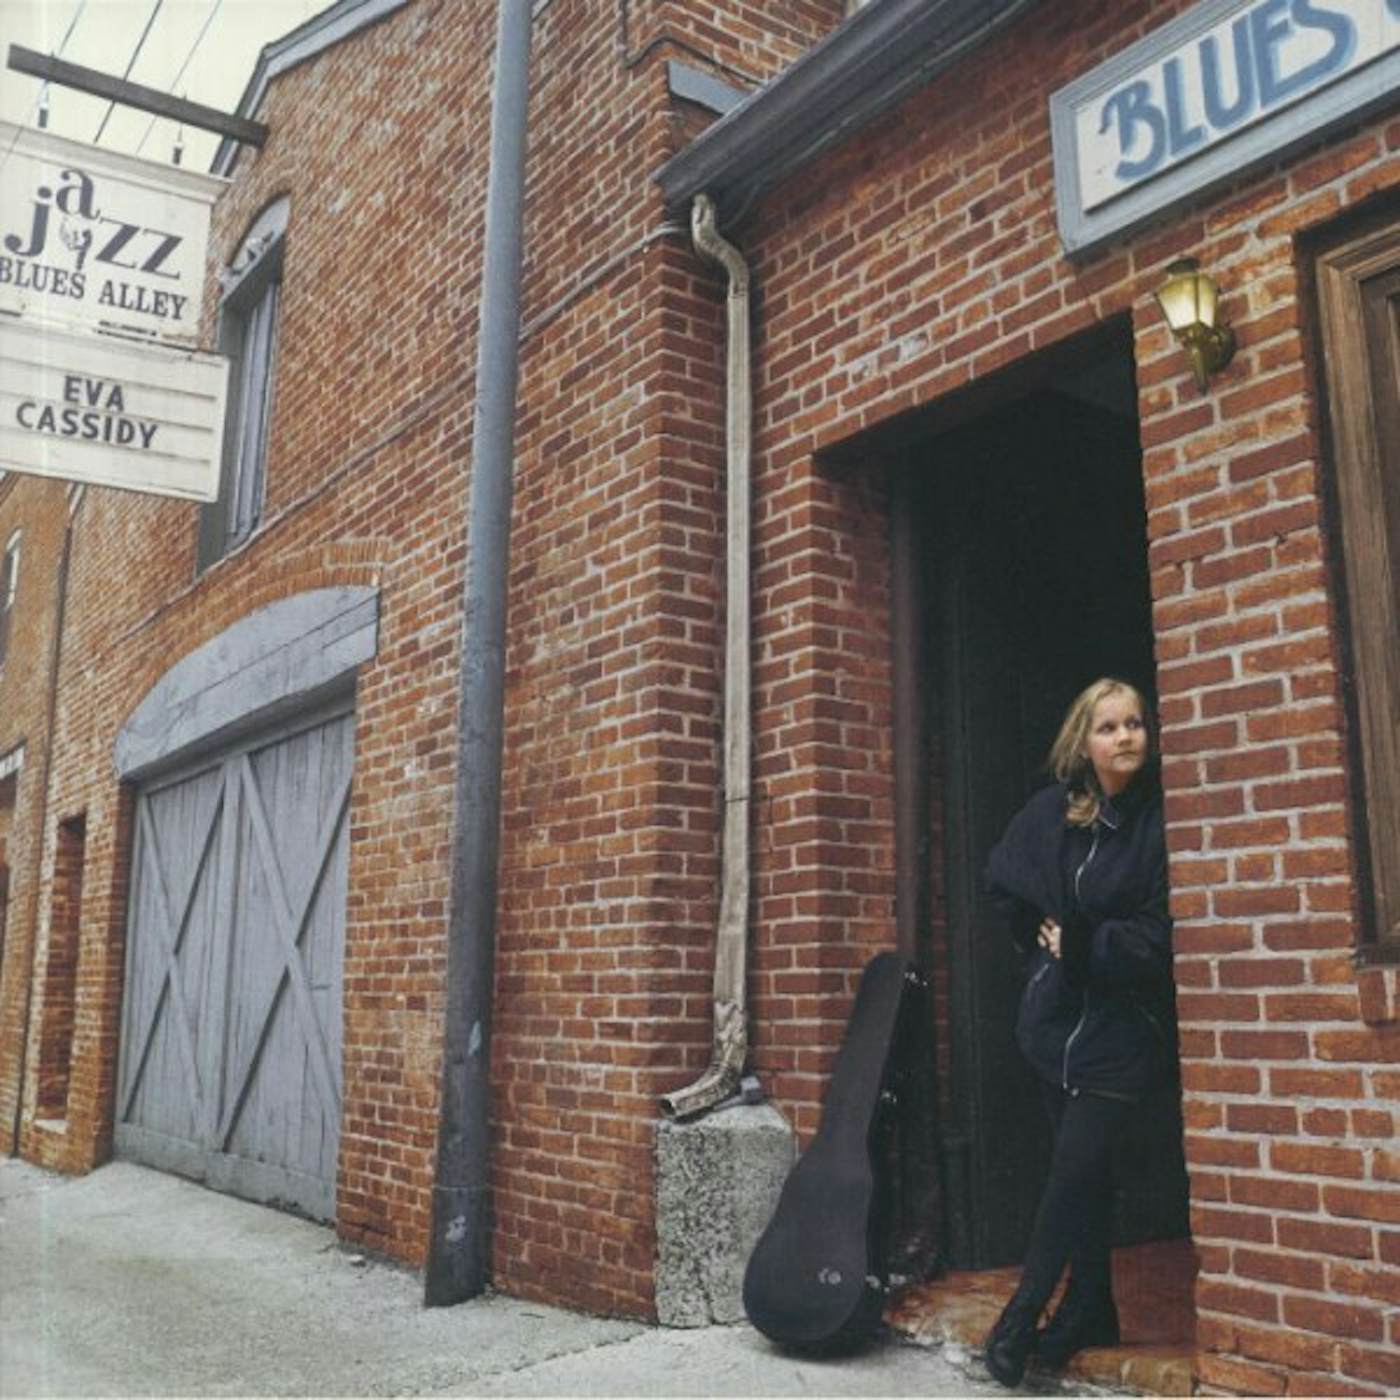 Eva Cassidy LIVE AT BLUES ALLEY (25TH ANNIVERSARY EDITION/2LP) Vinyl Record